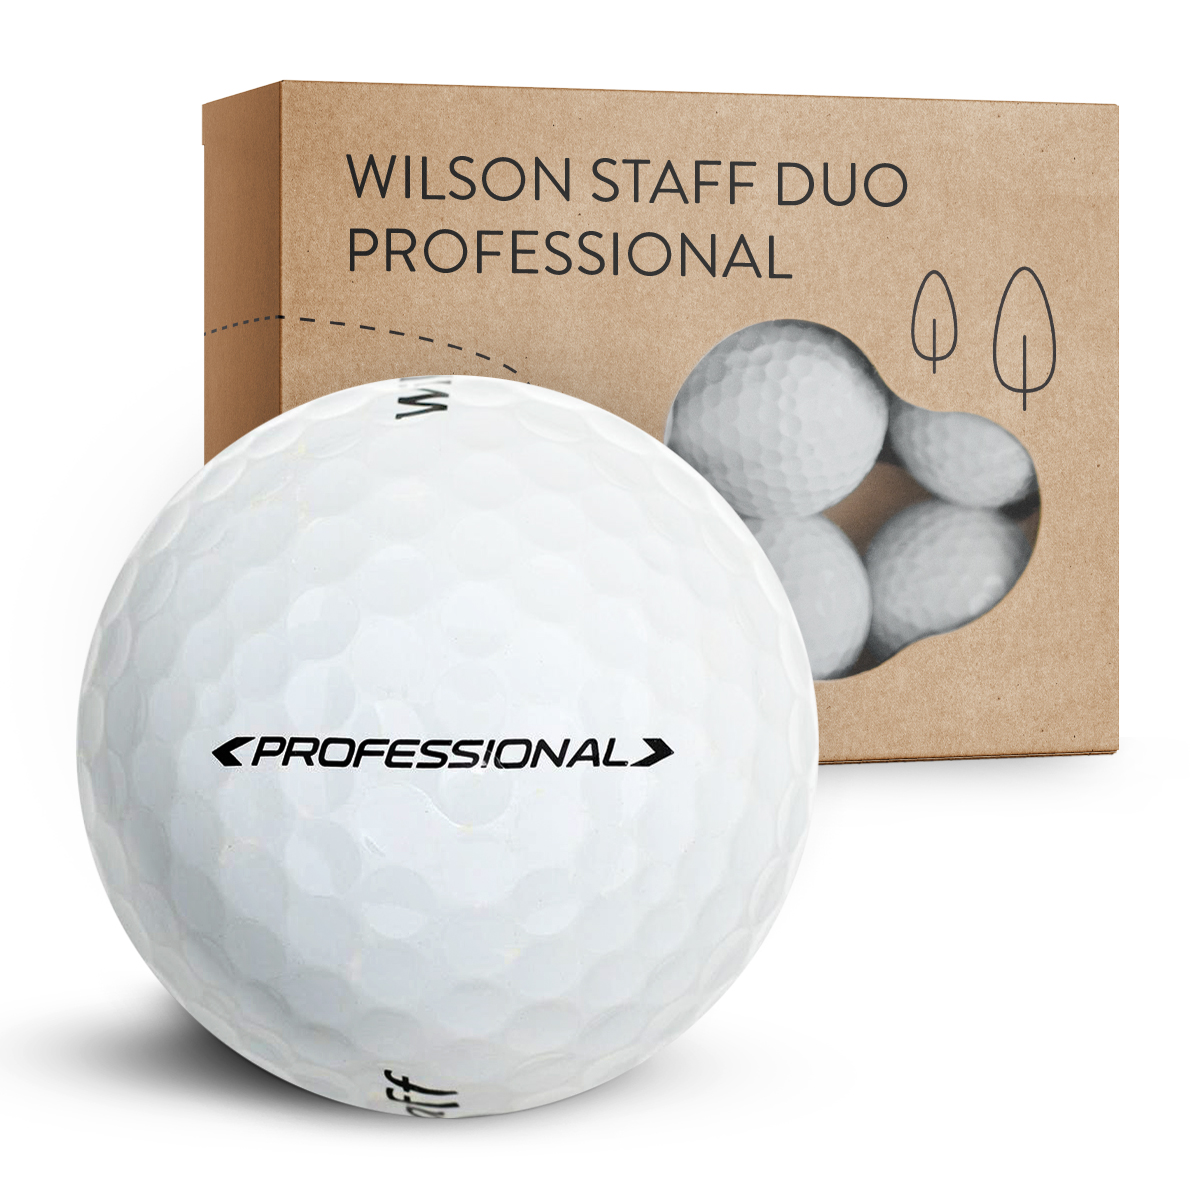 Wilson Staff Duo Professional